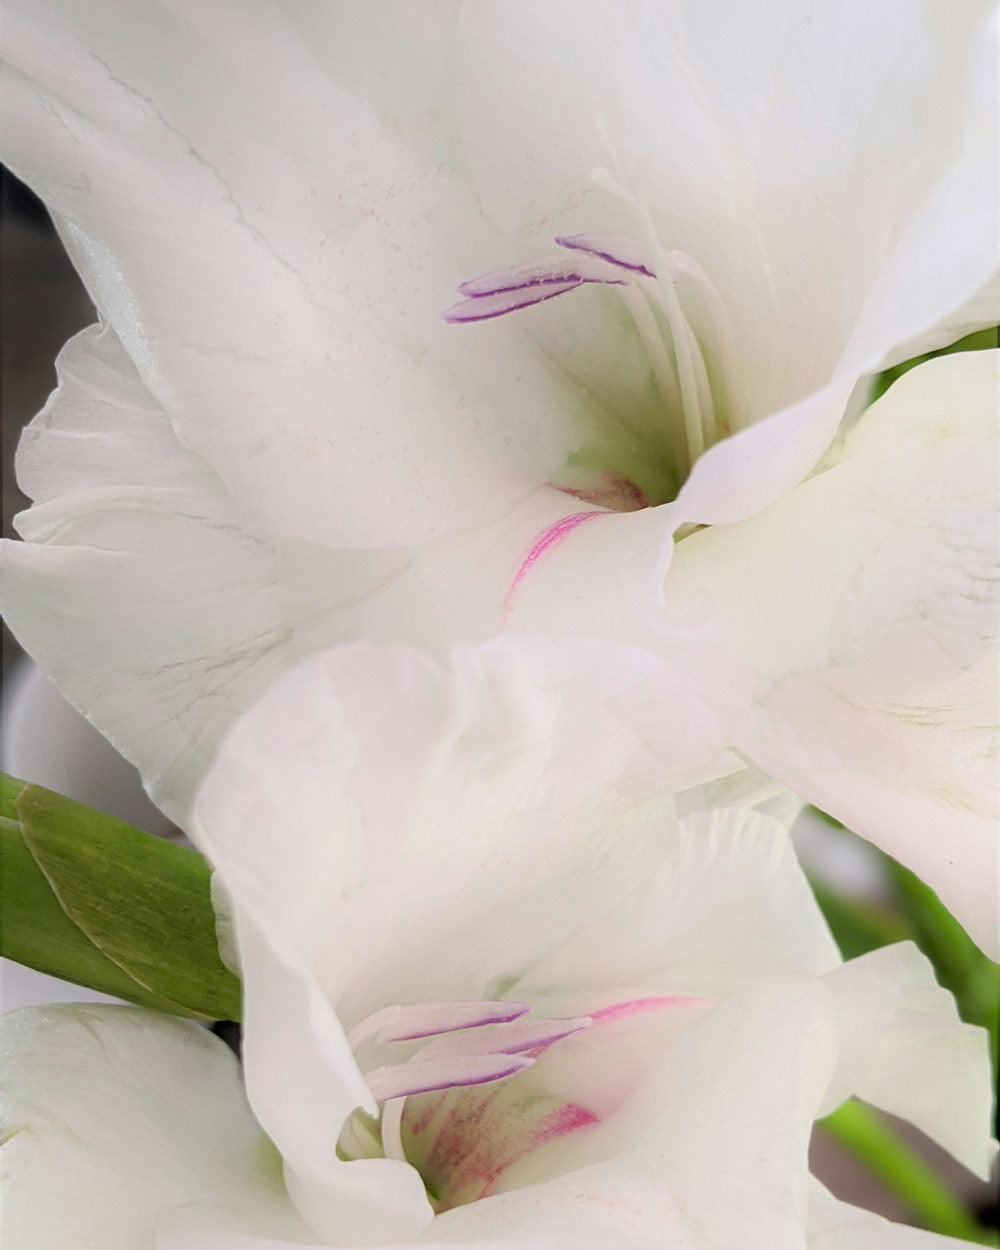 Gladiolus Flower Facts Information Guide